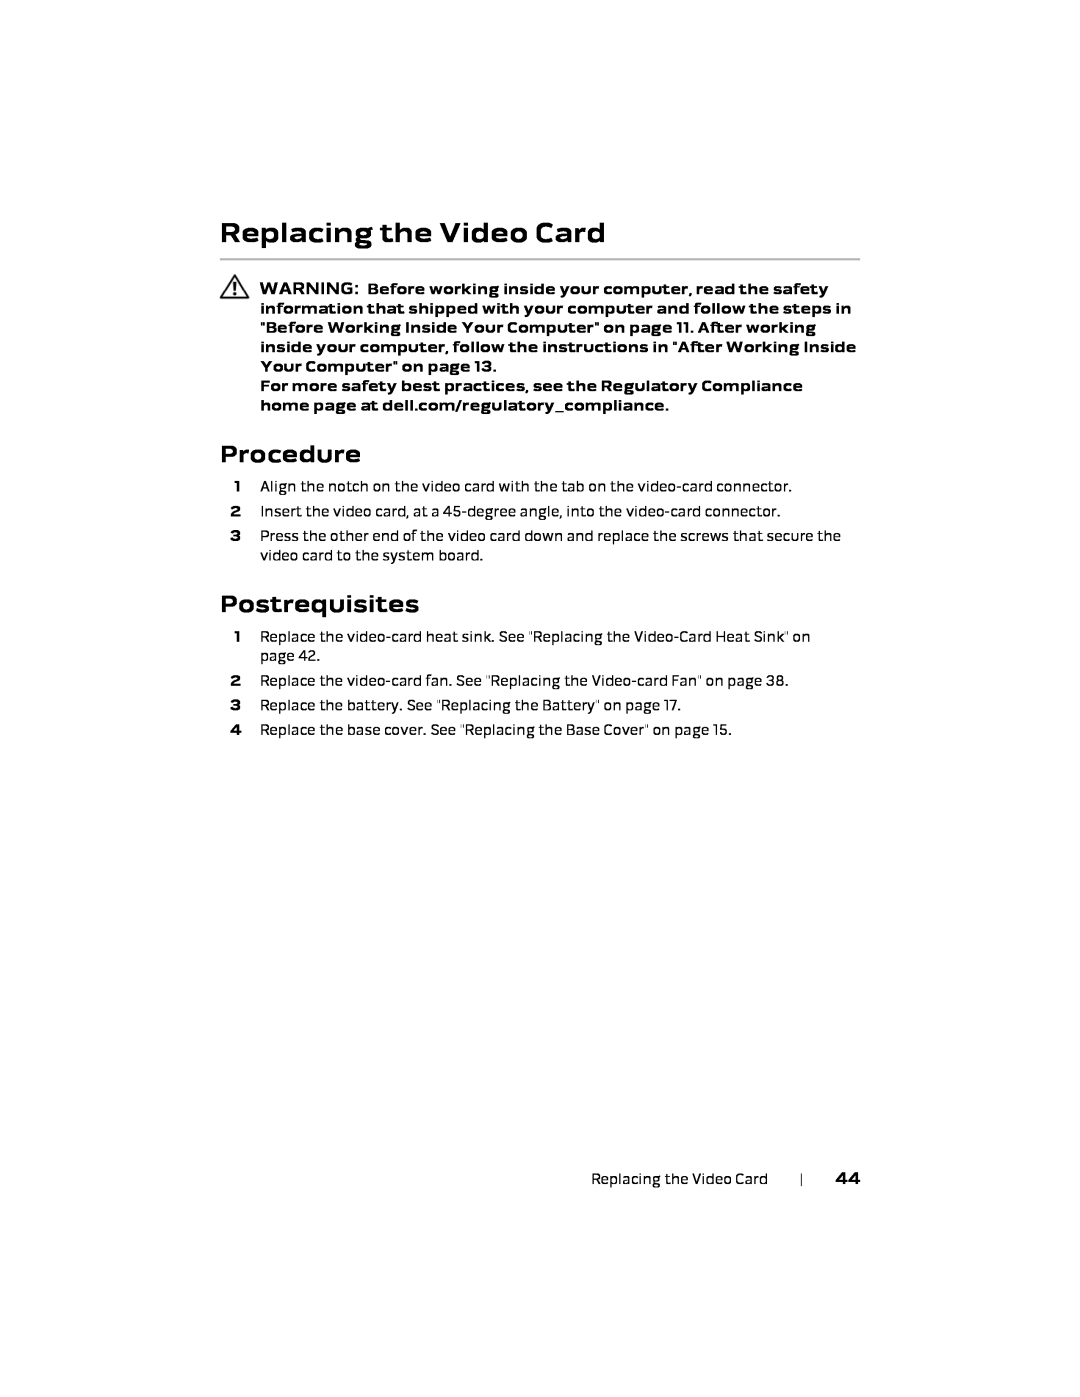 Alienware P18E, 17 R1 owner manual Replacing the Video Card, Procedure, Postrequisites 